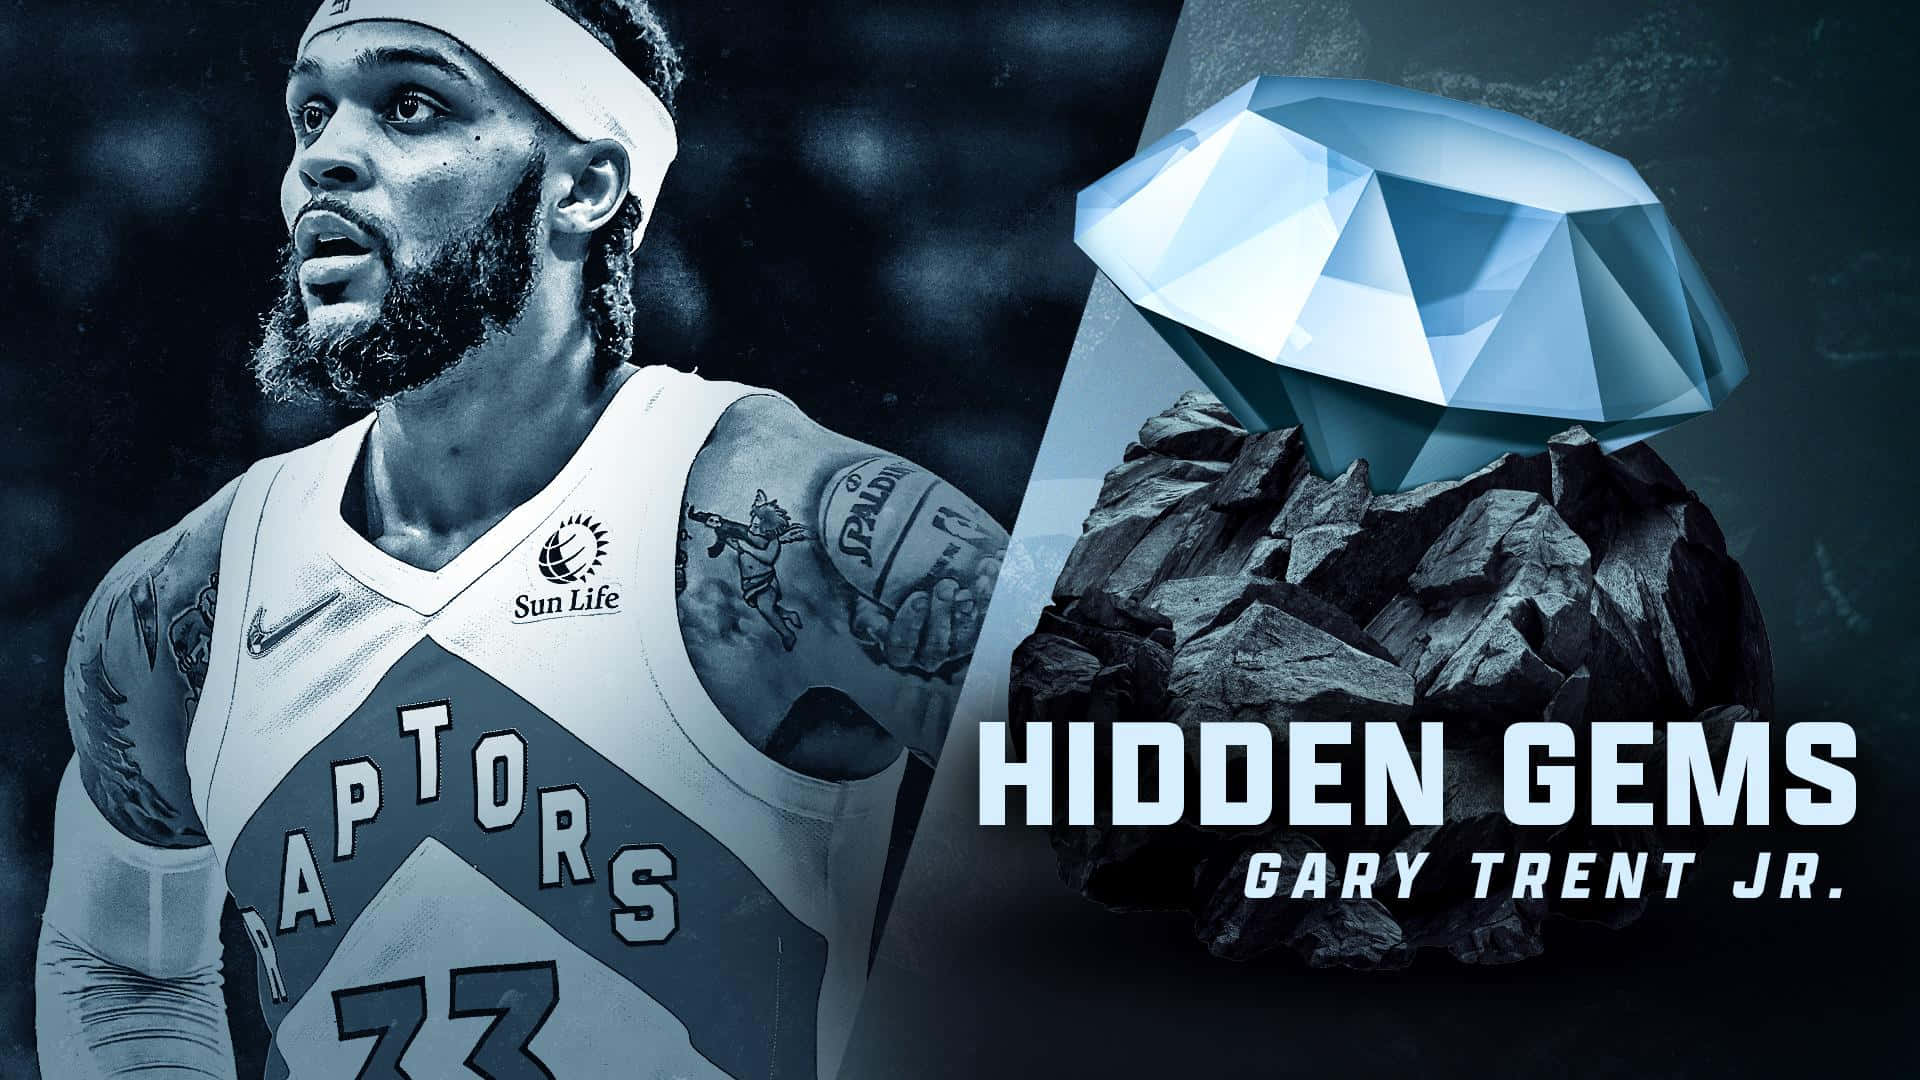 Garytrent Jr., Una Joya Oculta De Los Toronto Raptors. Fondo de pantalla